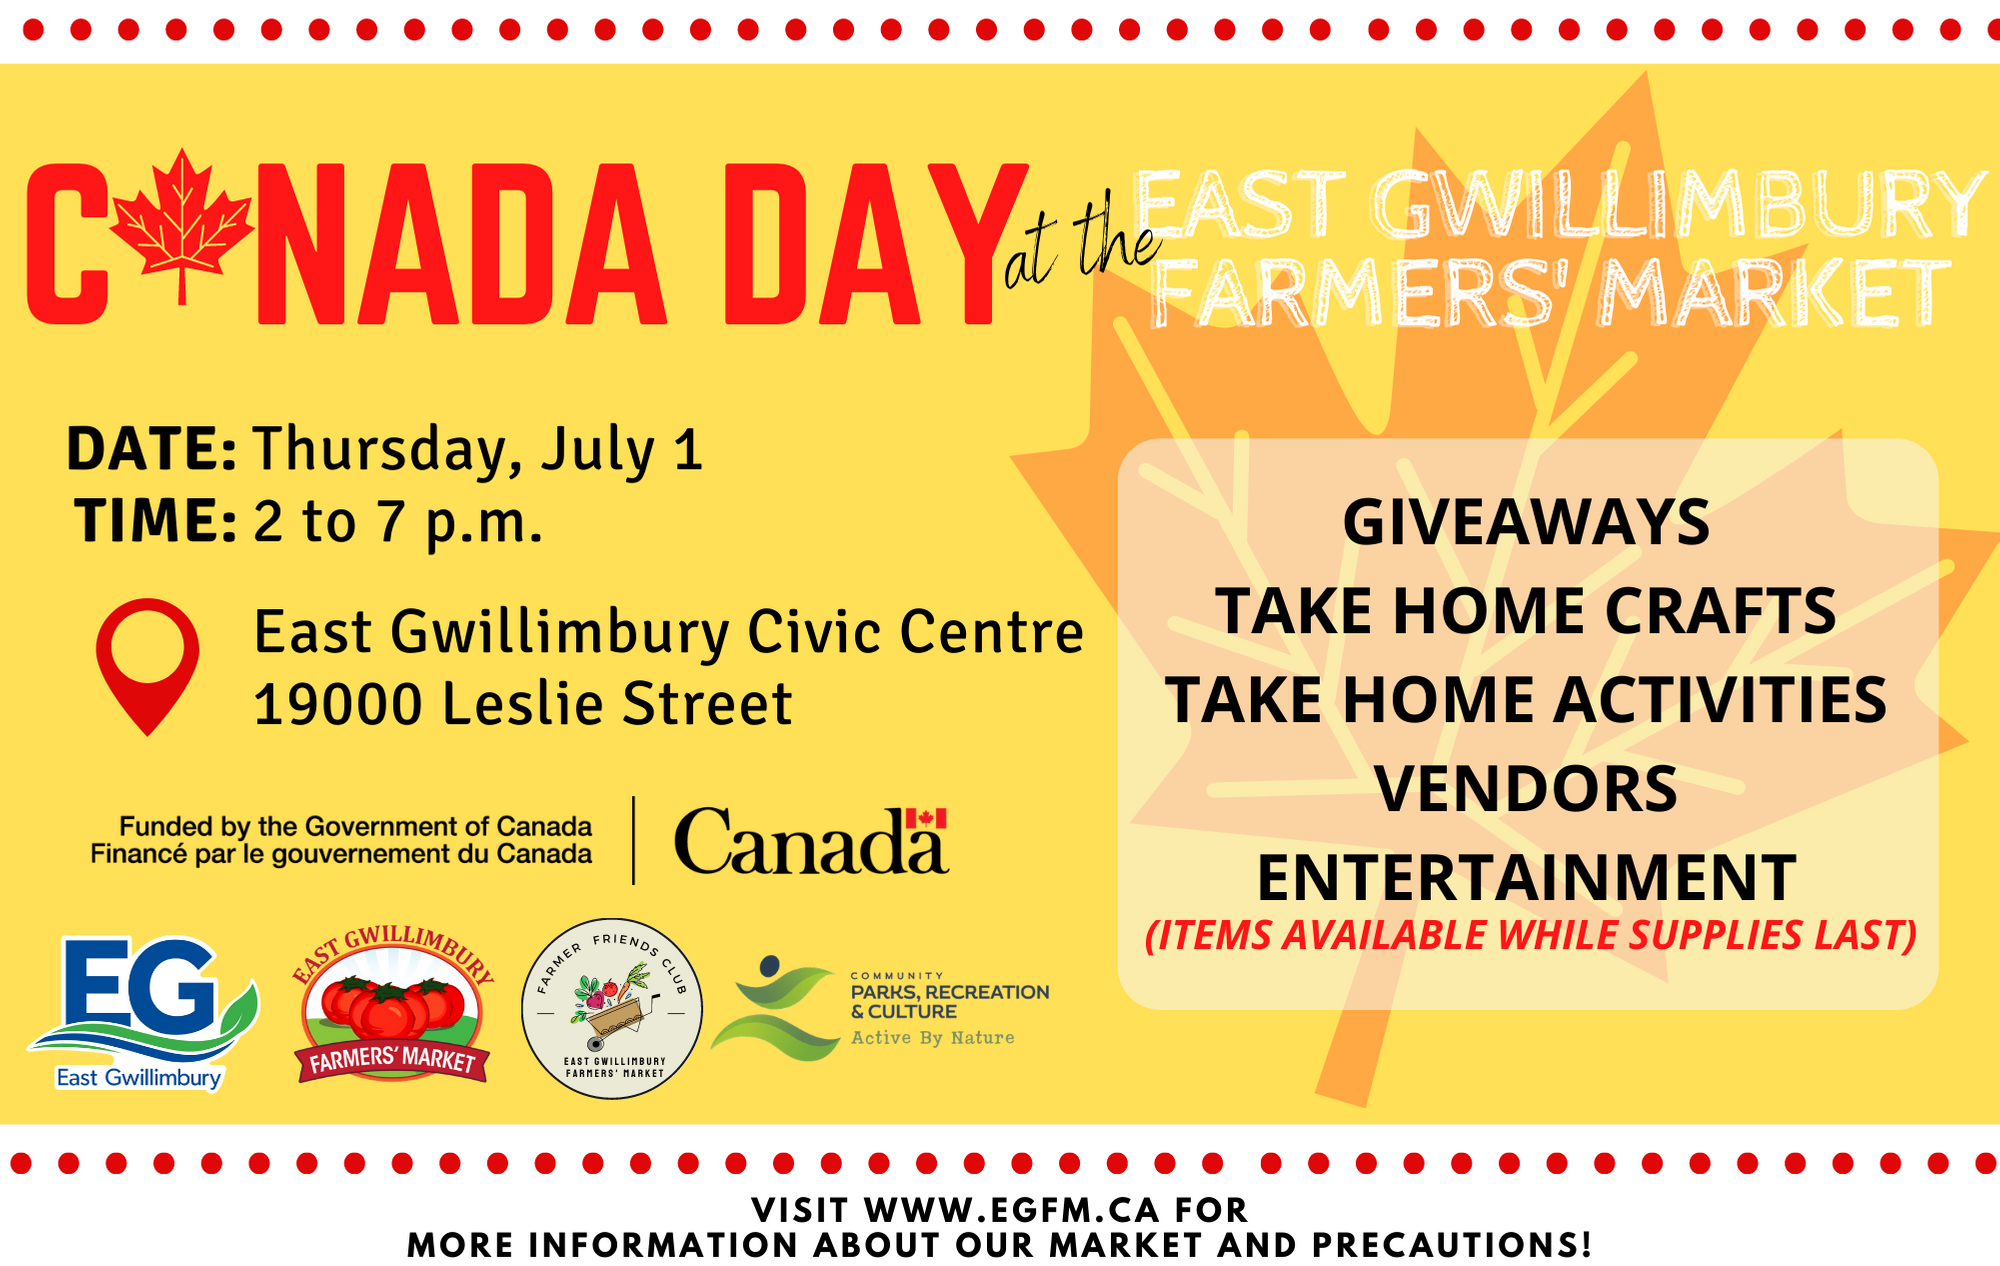 Canada Day - Farmers Market event ad